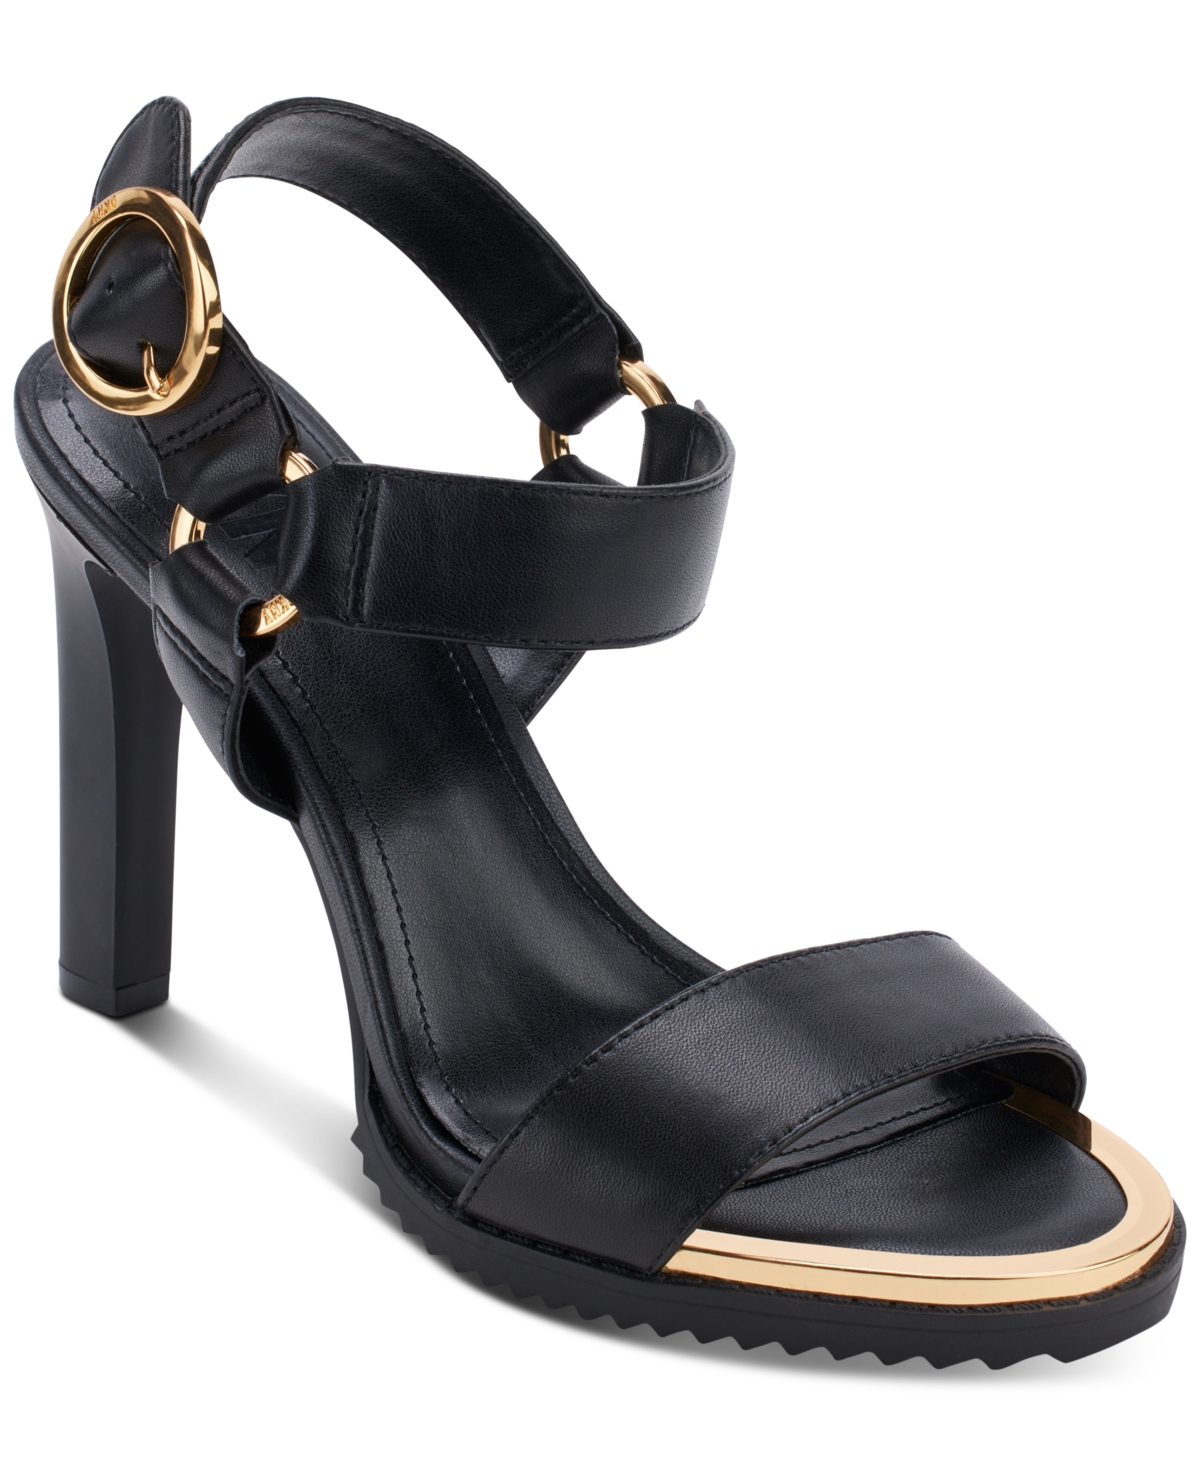 Dkny Blaire Ankle-Strap Slingback Dress Sandals